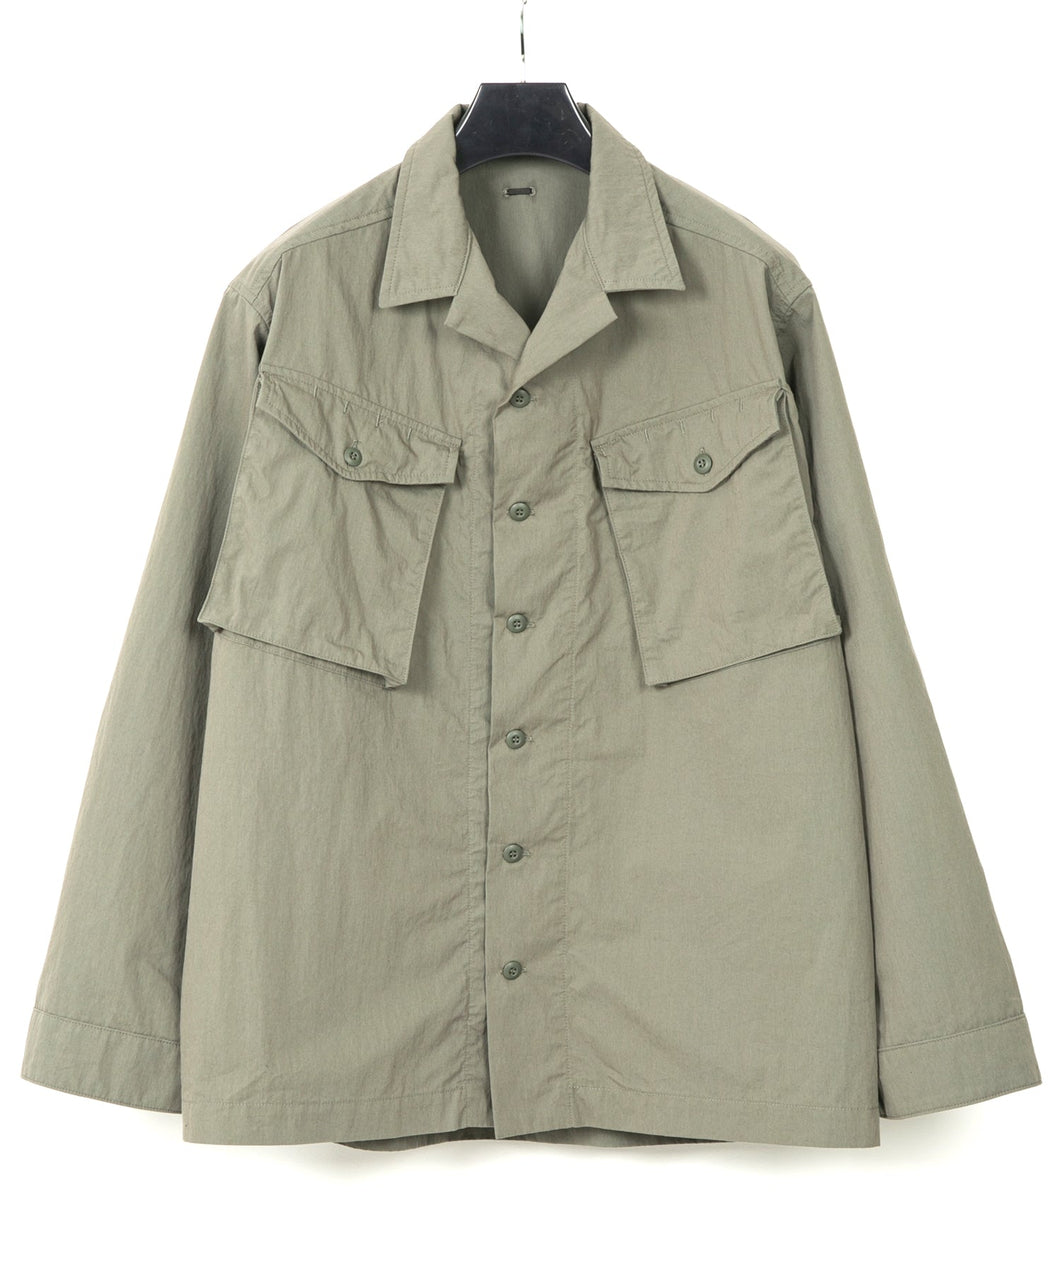 Washer Dyed Cotton & Nylon Weather Cloth Military Shirts Blouson - OLIVE